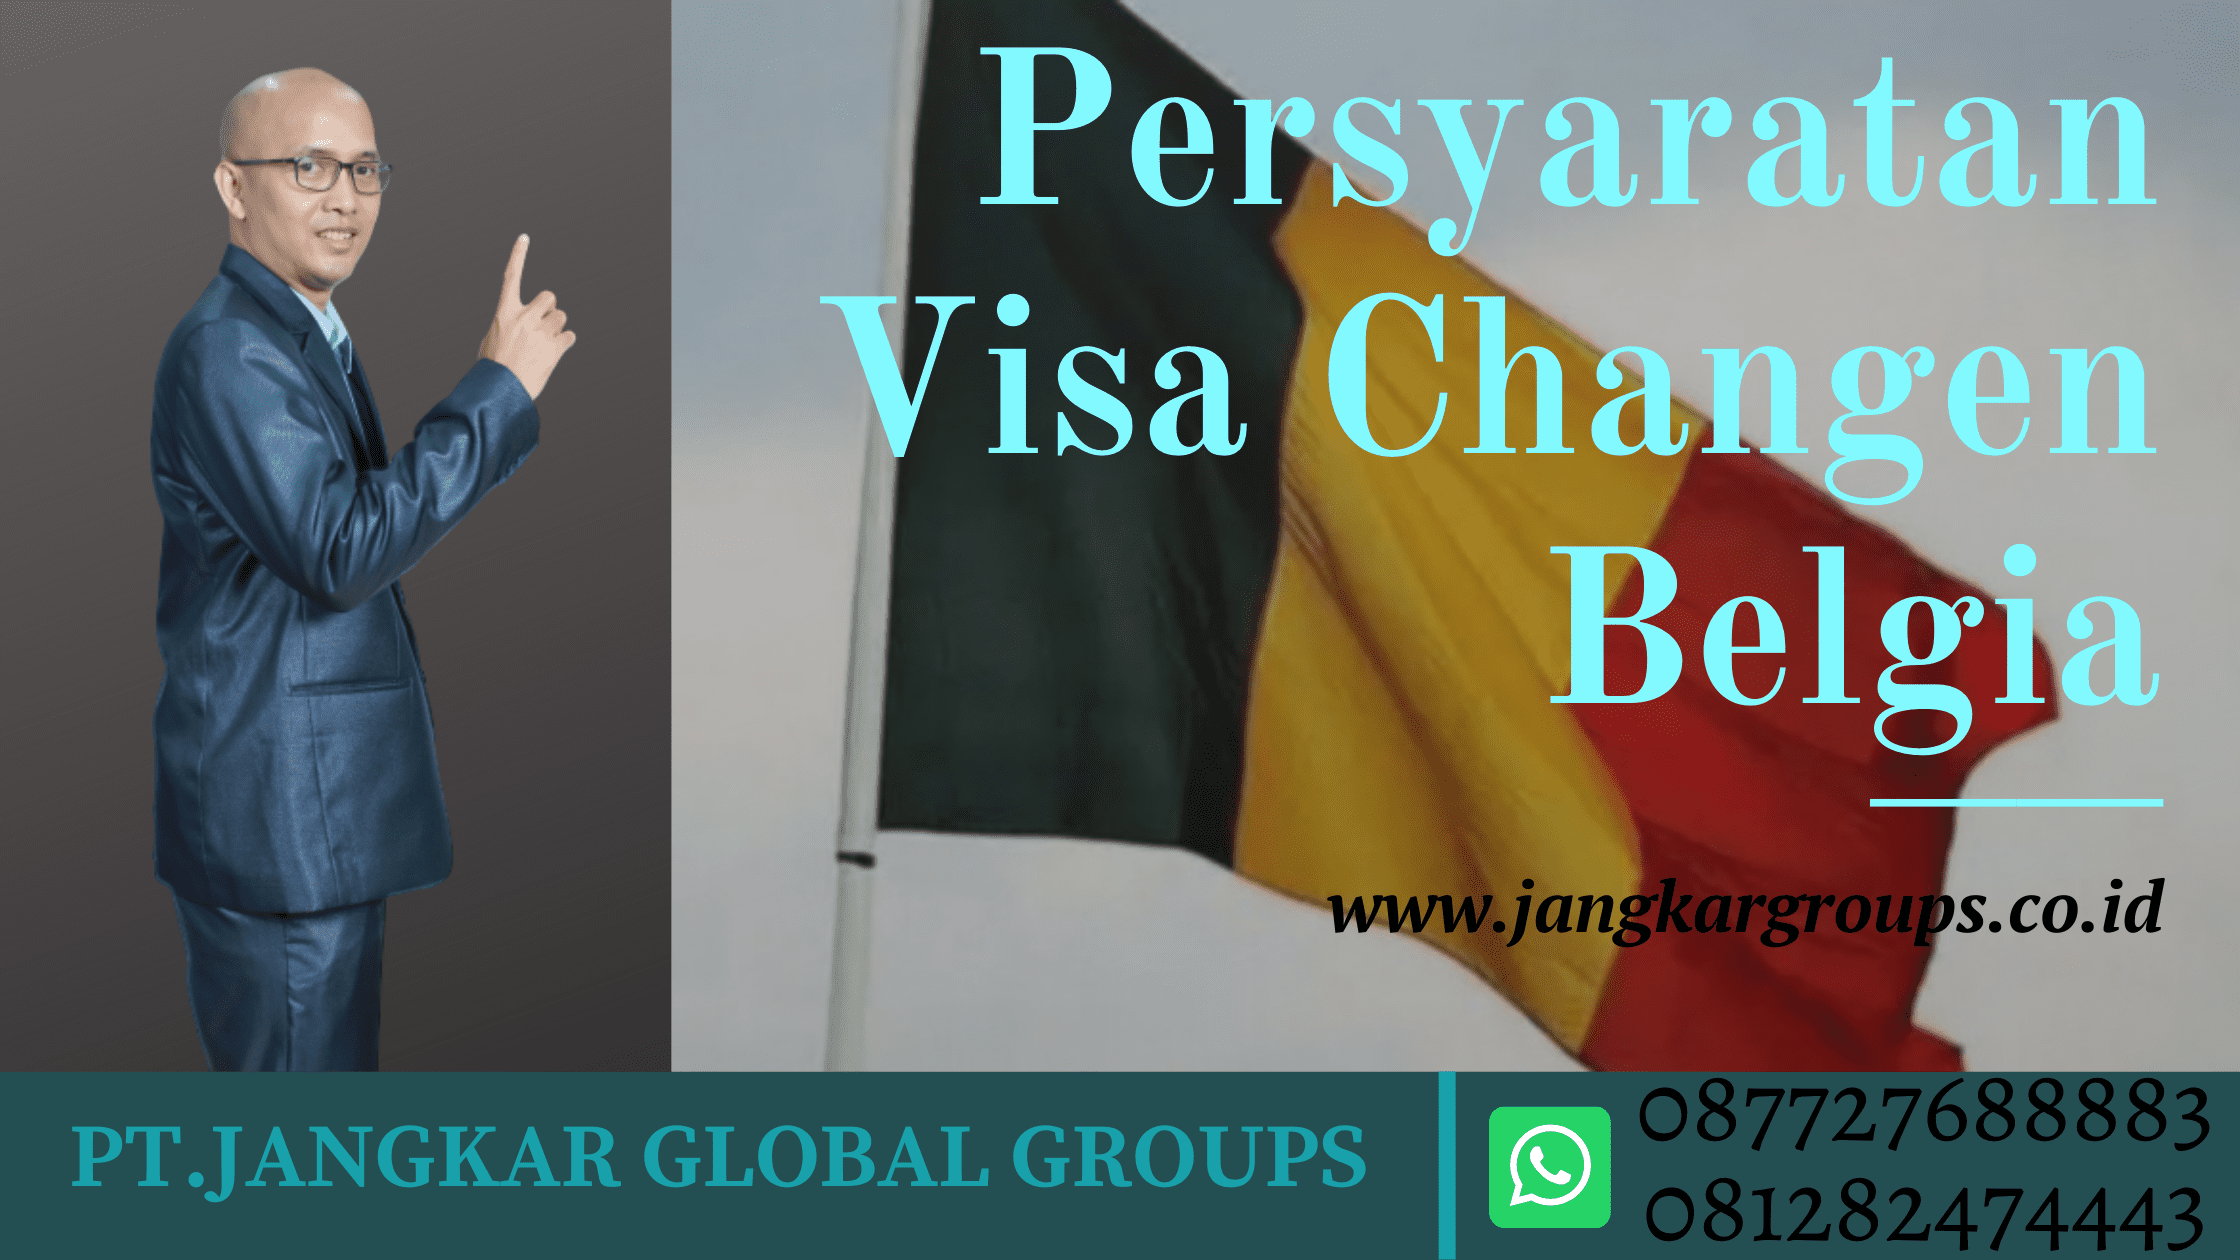 Persyaratan Visa Changen Belgia